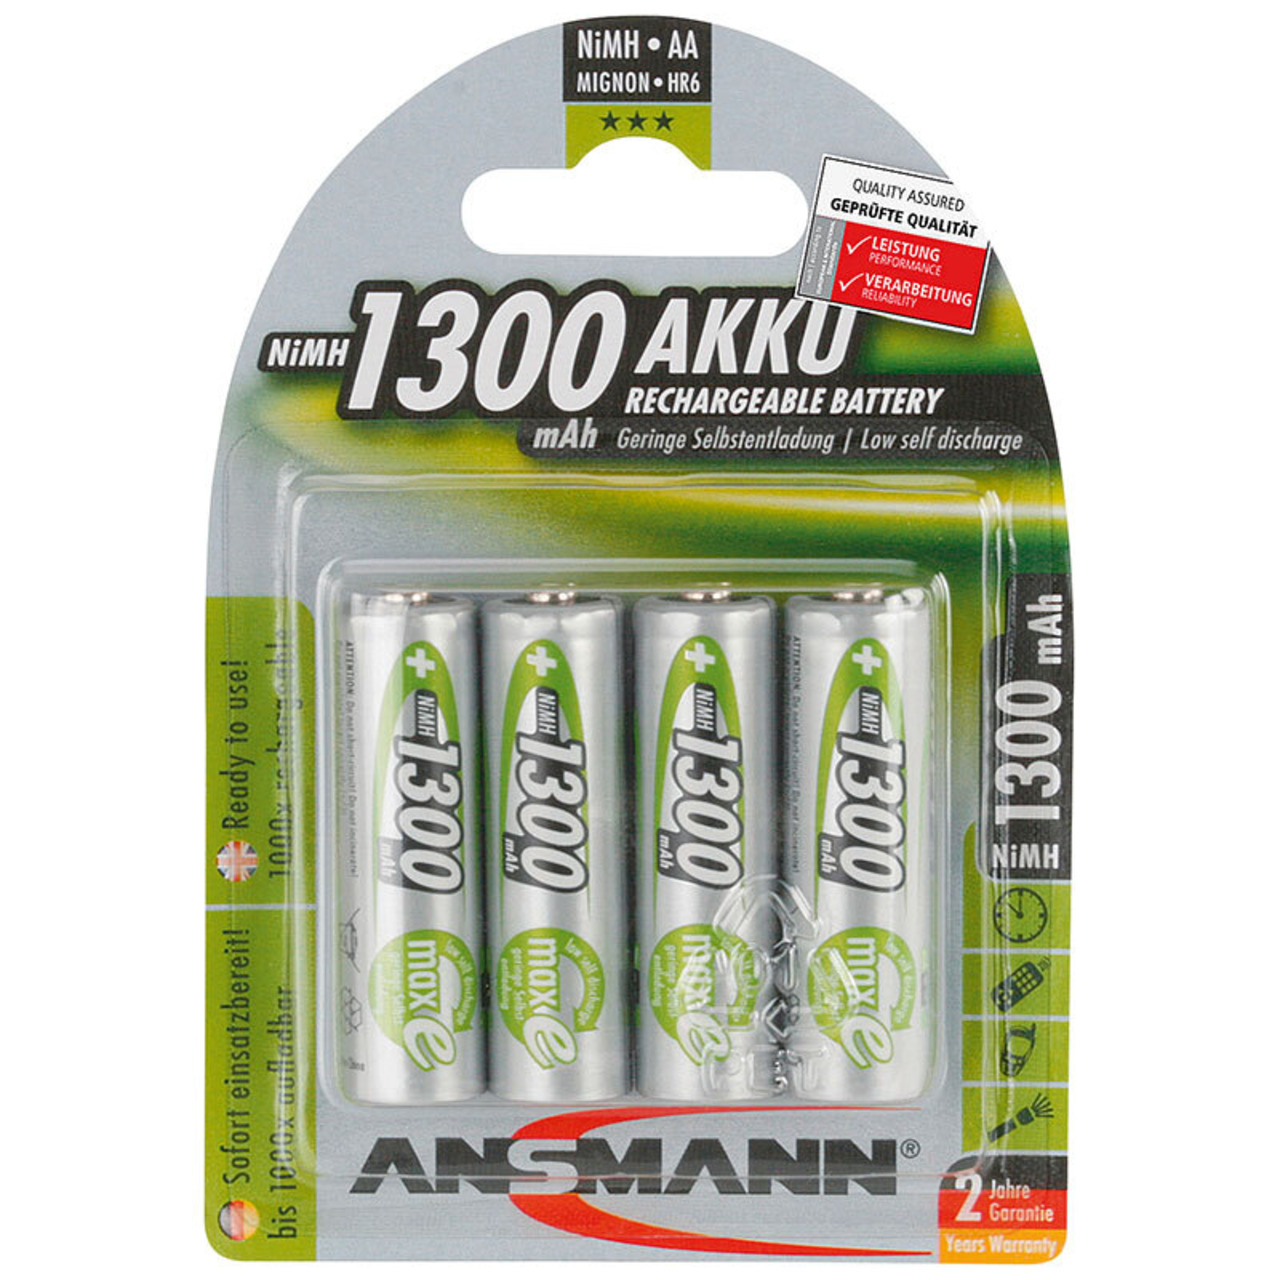 Ansmann NiMH Akku maxE- ready2use Mignon AA 1300mAh- R6 4er-Pack unter Stromversorgung